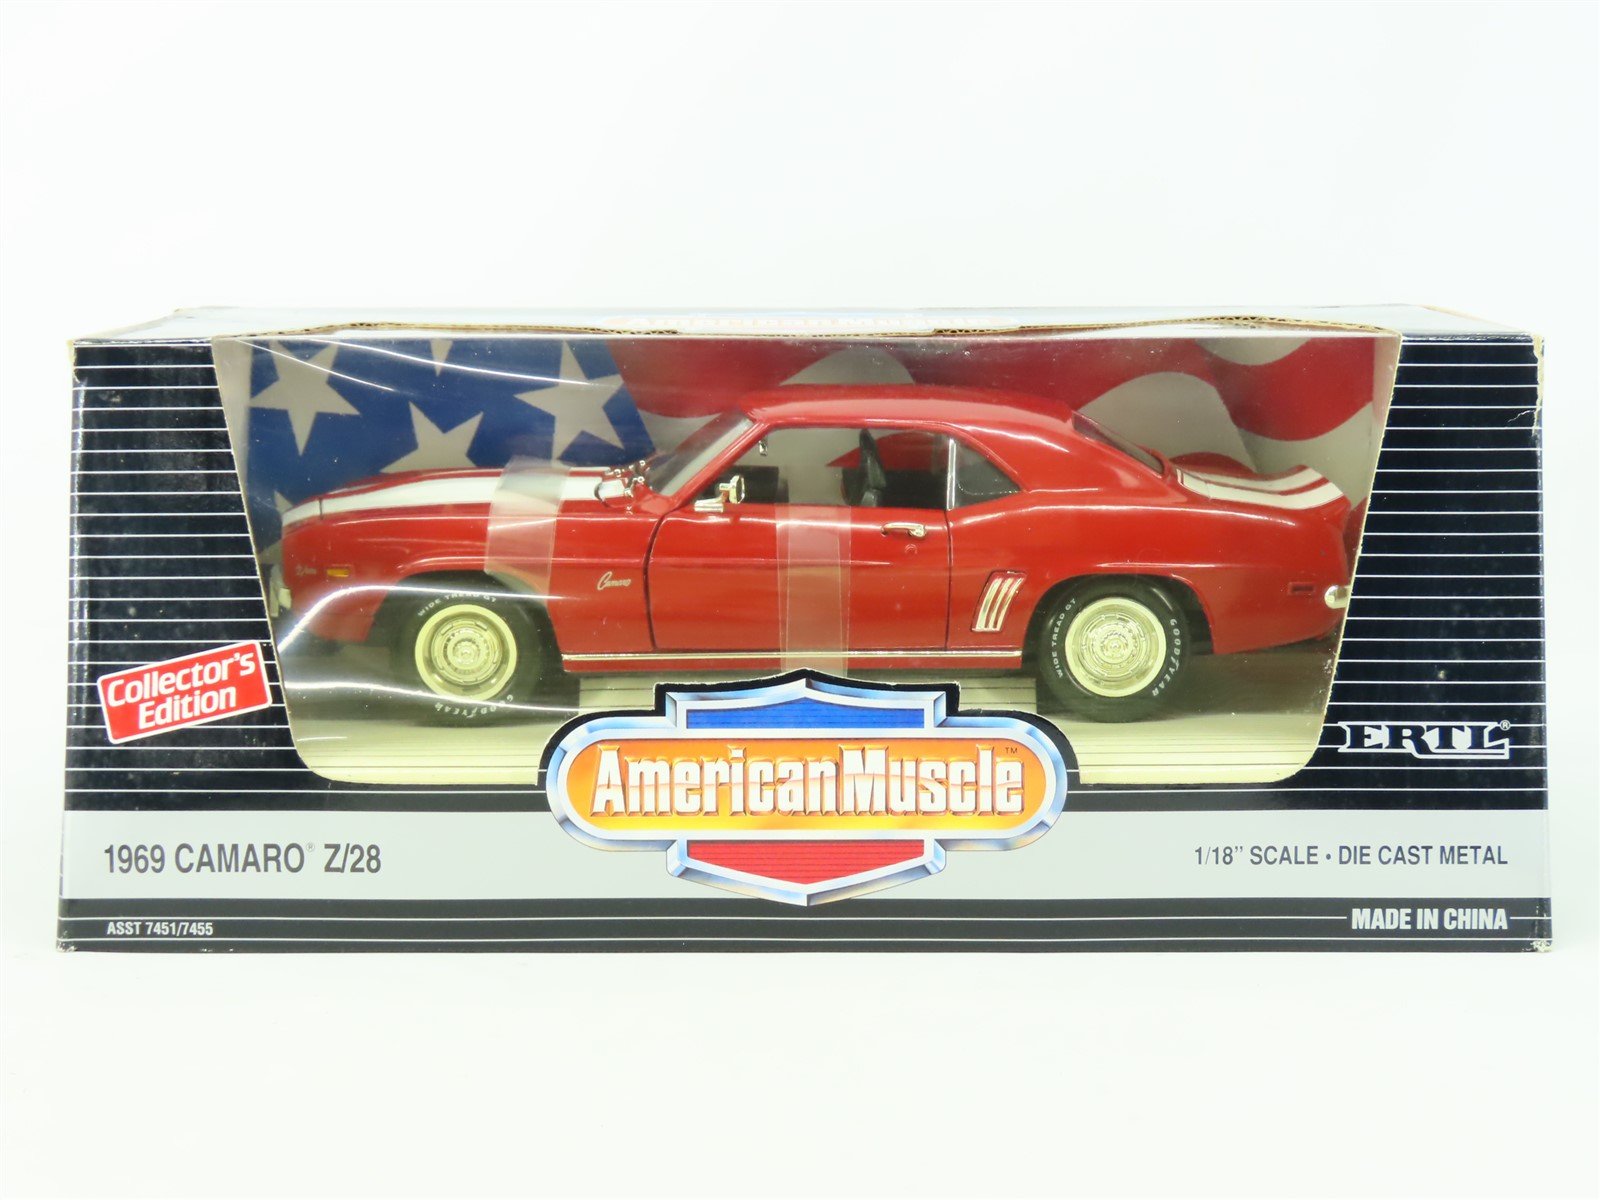 1:18 Scale Ertl American Muscle #7455 Die-Cast 1969 Camaro Z/28 - Red/White